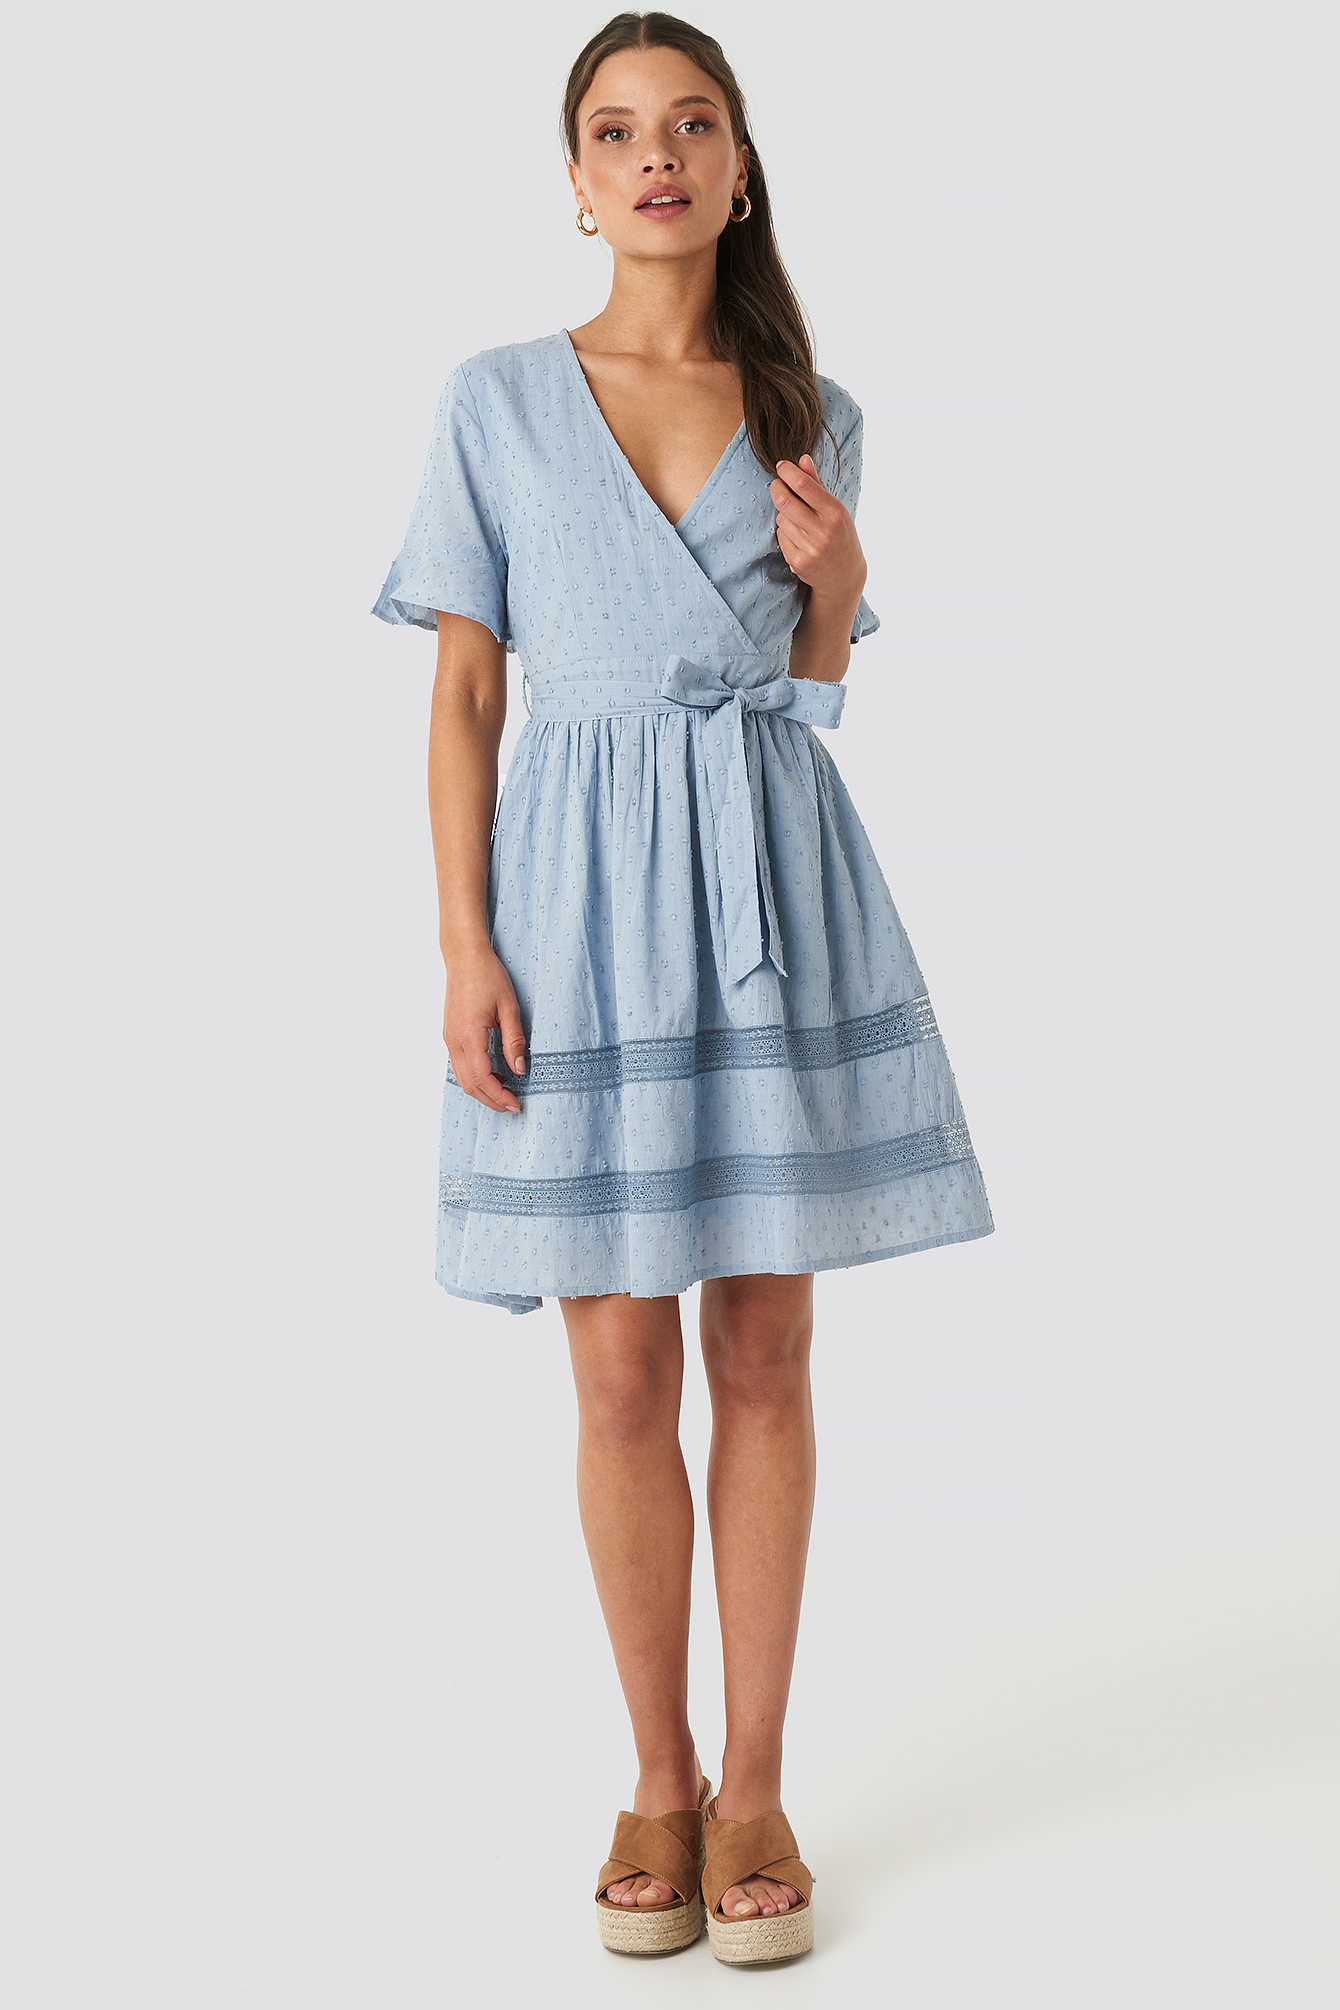 Dusty Blue Lace Insert Cotton Mini Dress